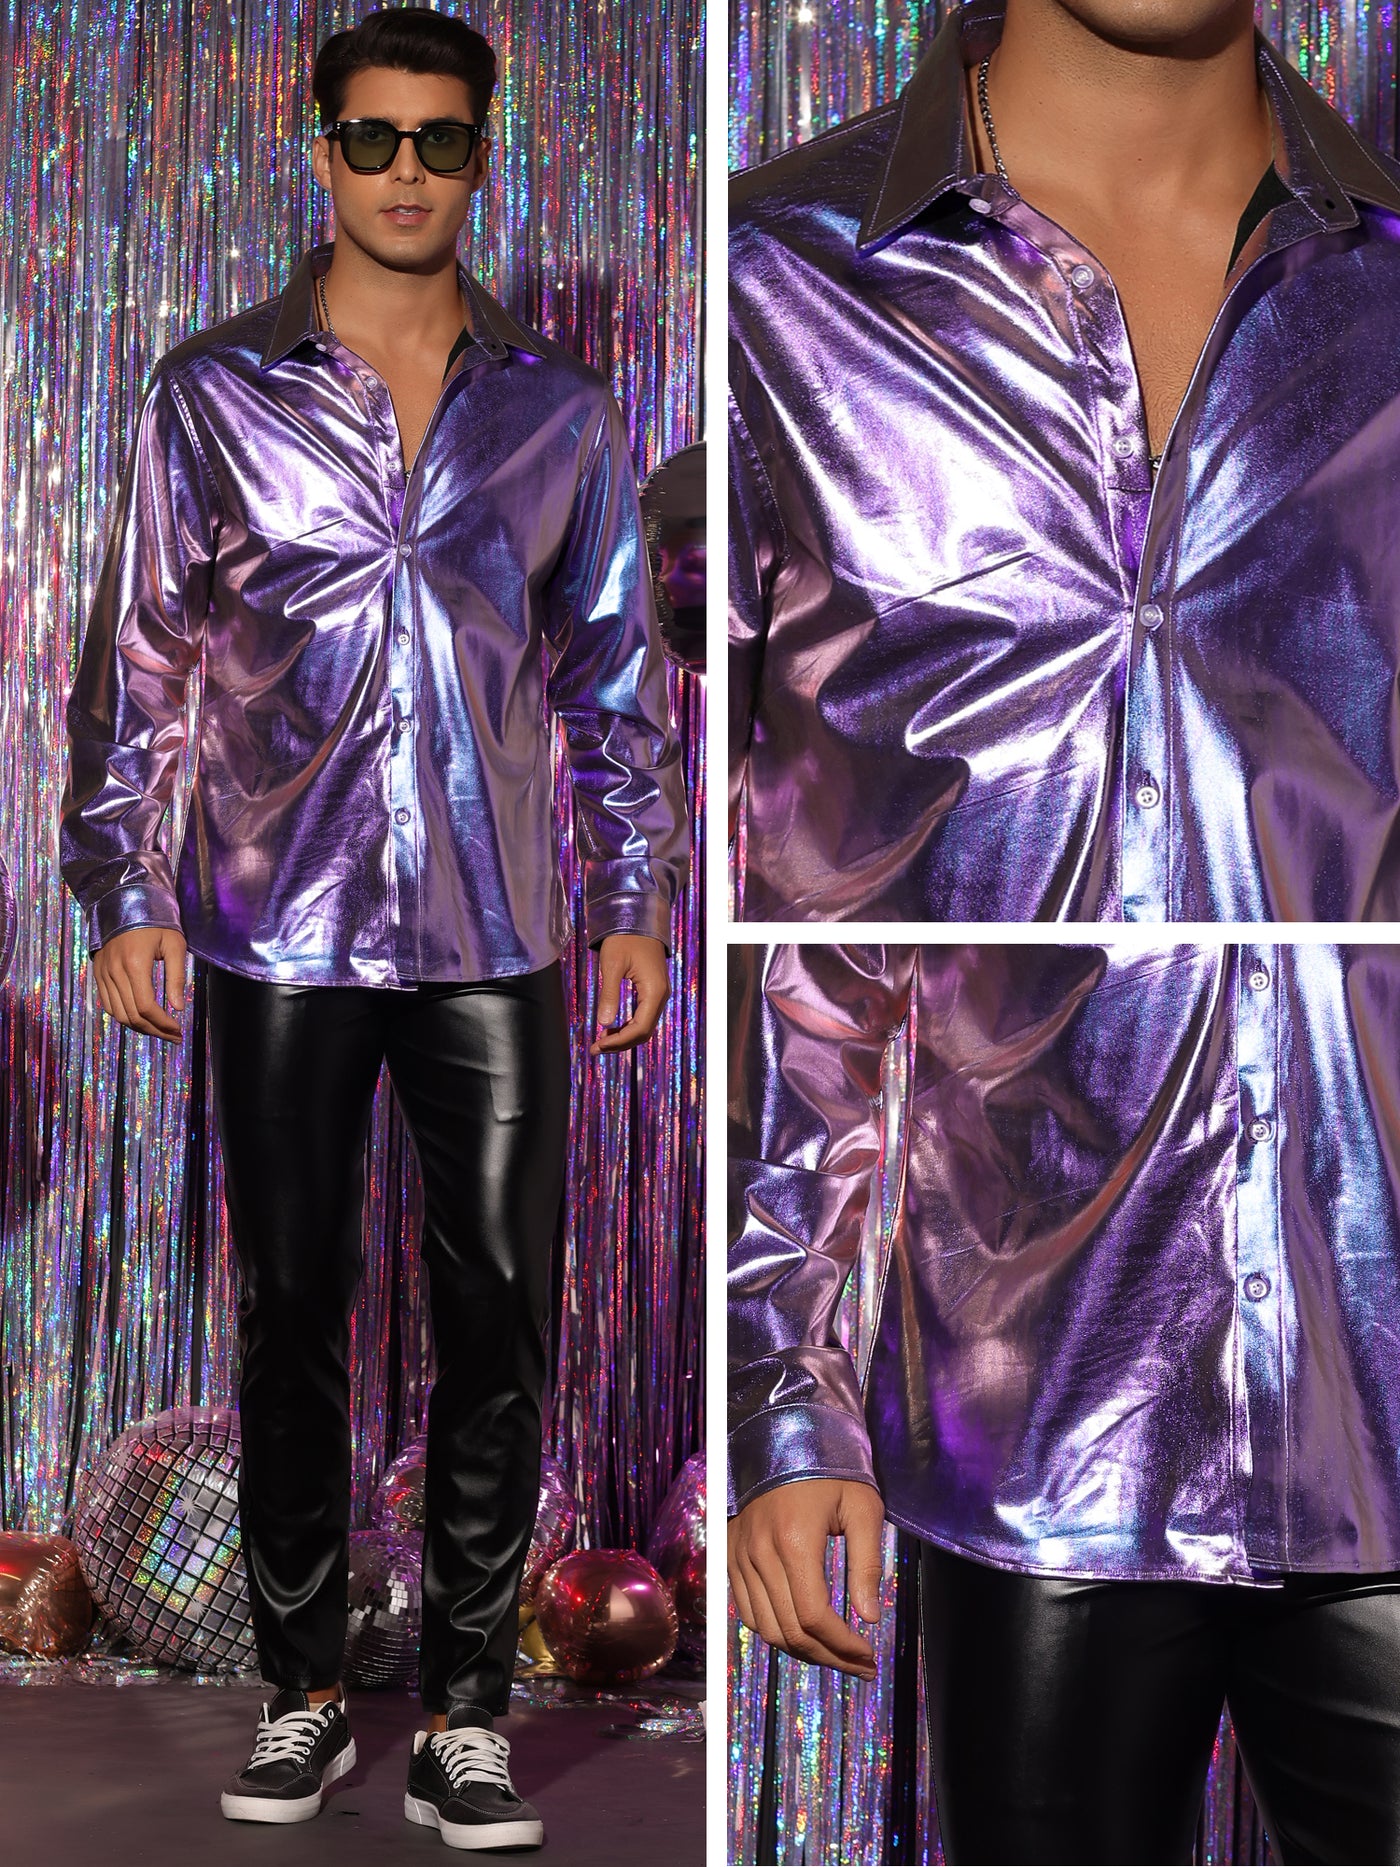 Bublédon Men's Holographic Shirts Long Sleeves Button Down Party Shiny Metallic Shirt